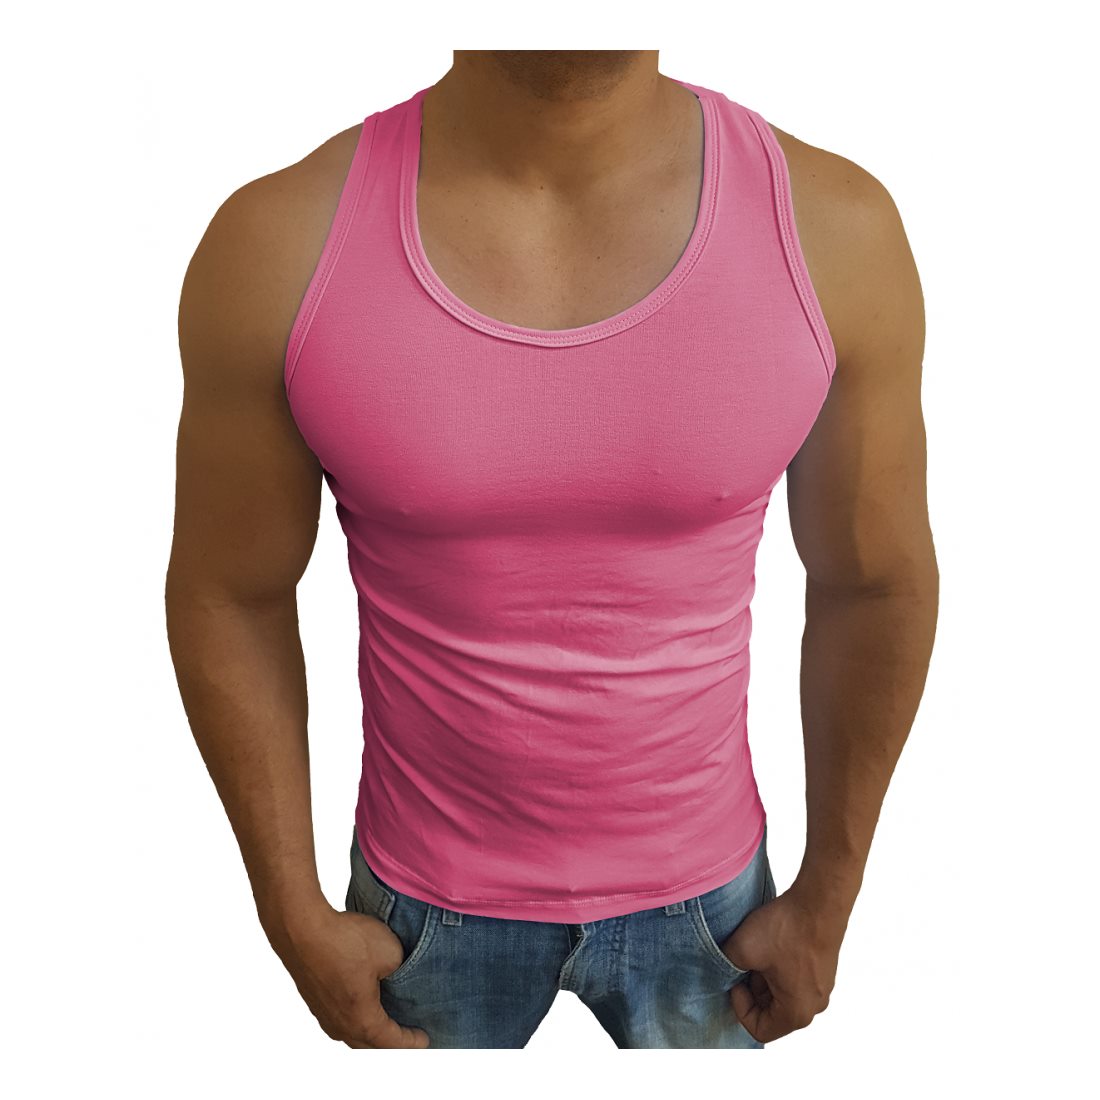 Camiseta Masculino Estilo Americana Regata Tank07 Sjons - Sjons Modas